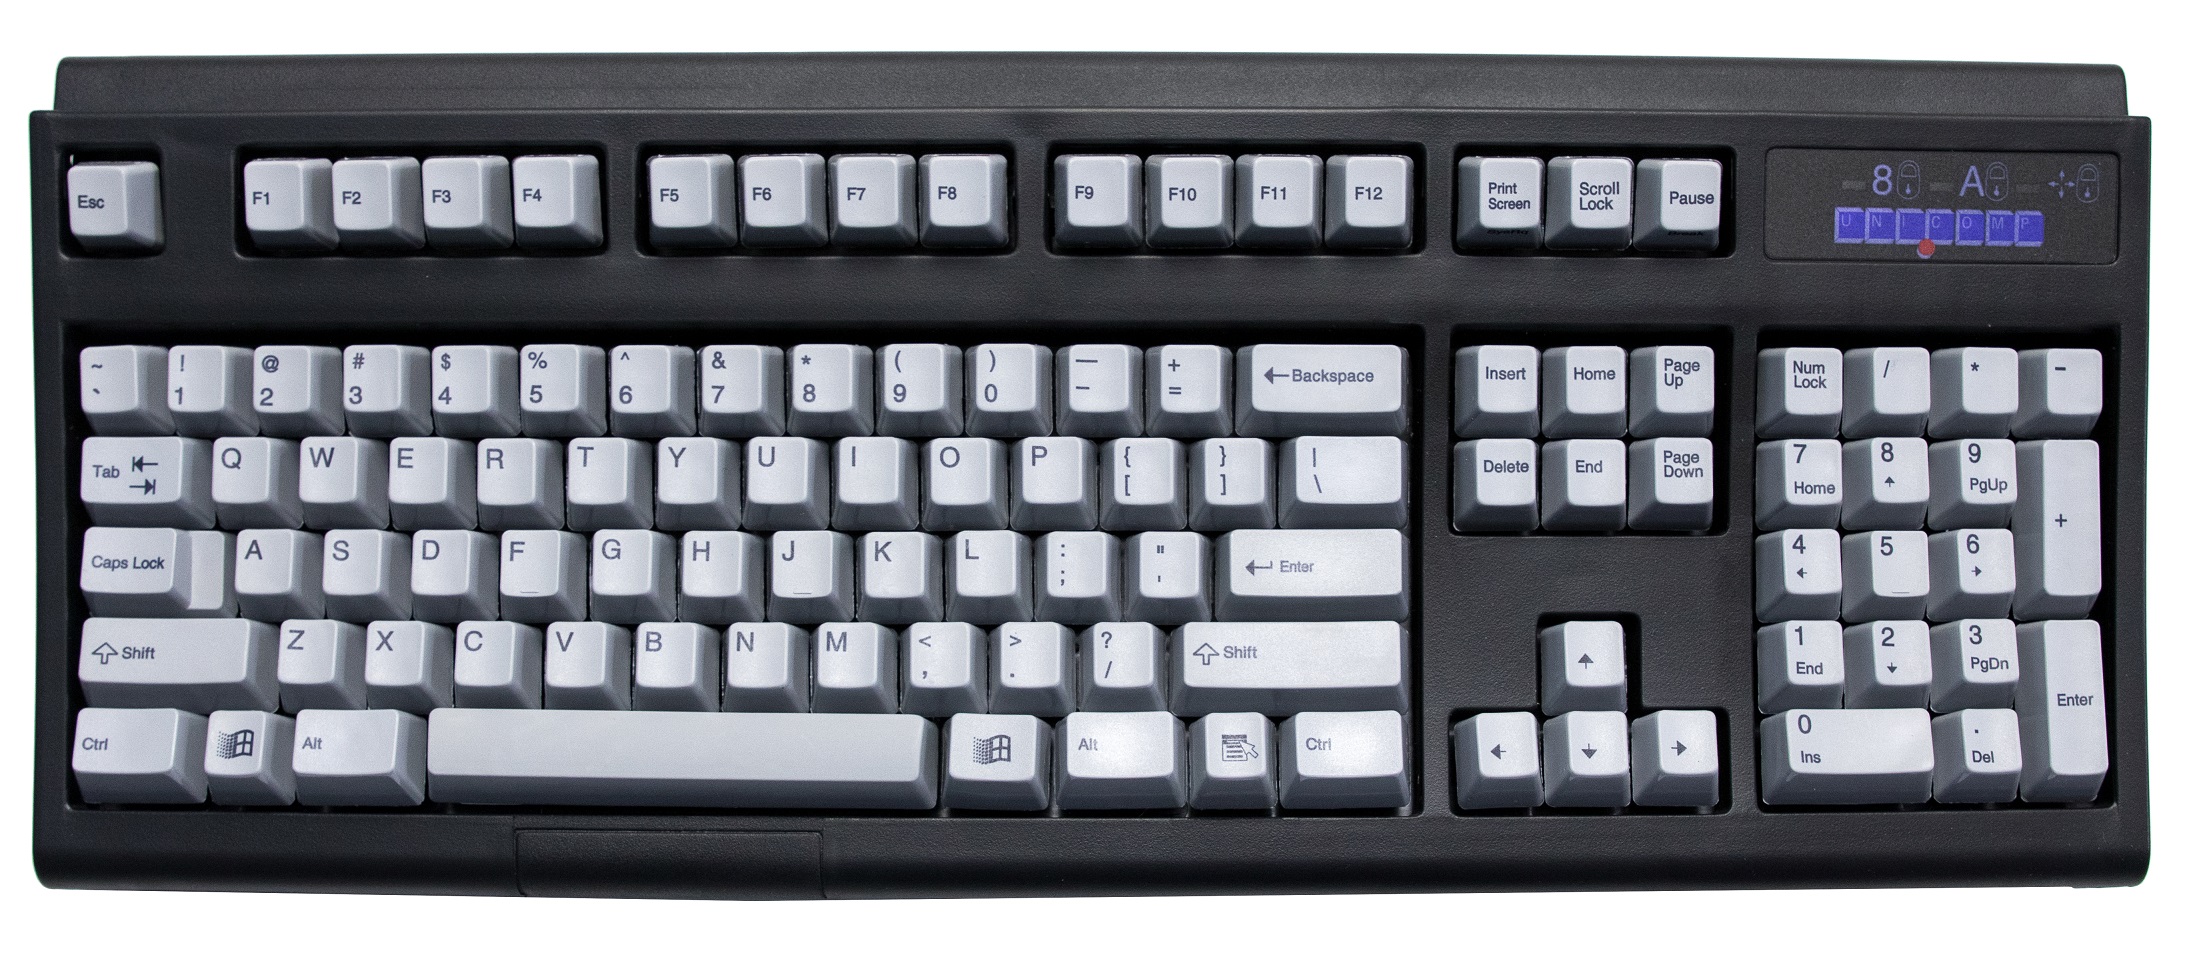 Maand Tussen les Unicomp, Inc.: Unicomp Keyboards